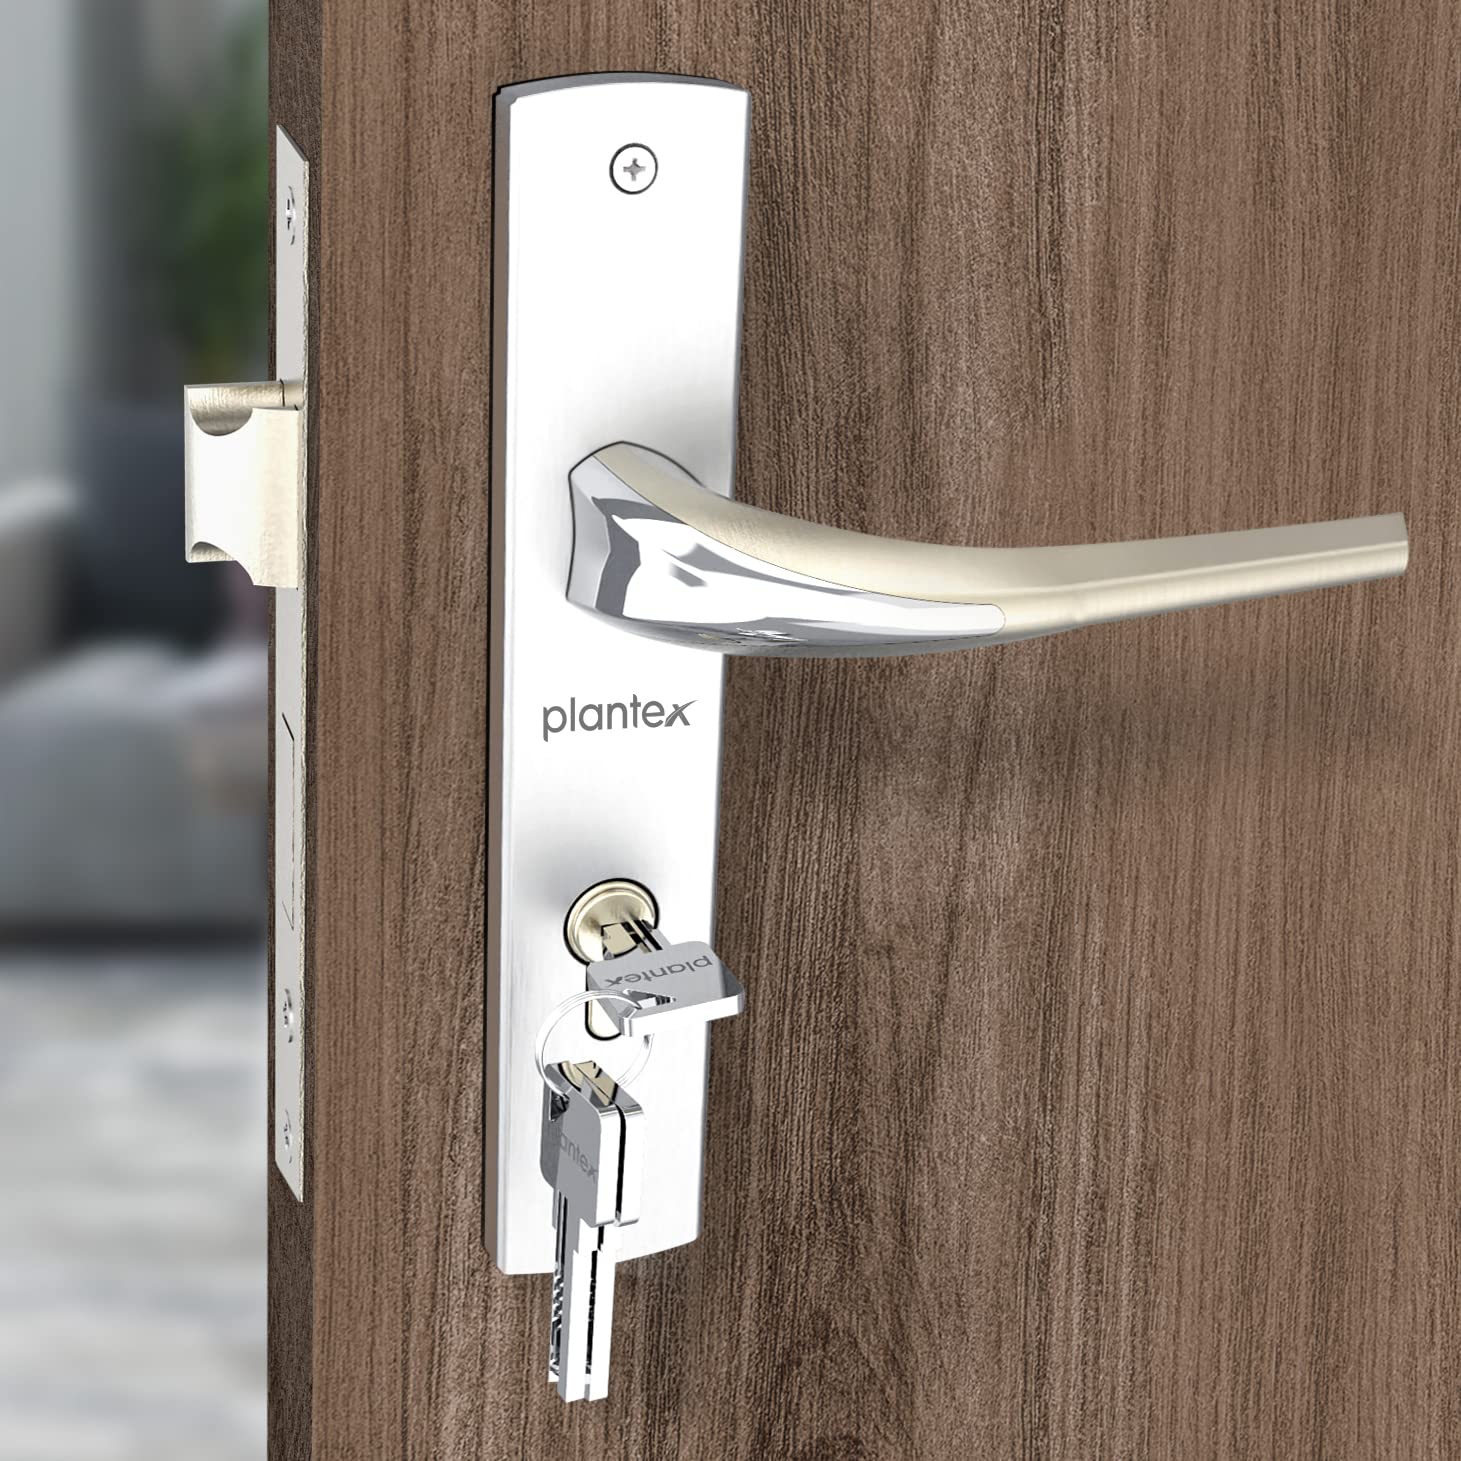 Plantex Door Lock 8026 7 Inch Handle Lock for Door 3 Keys/Mortise Lock for Home Office Hotel (Chrome & Matt)